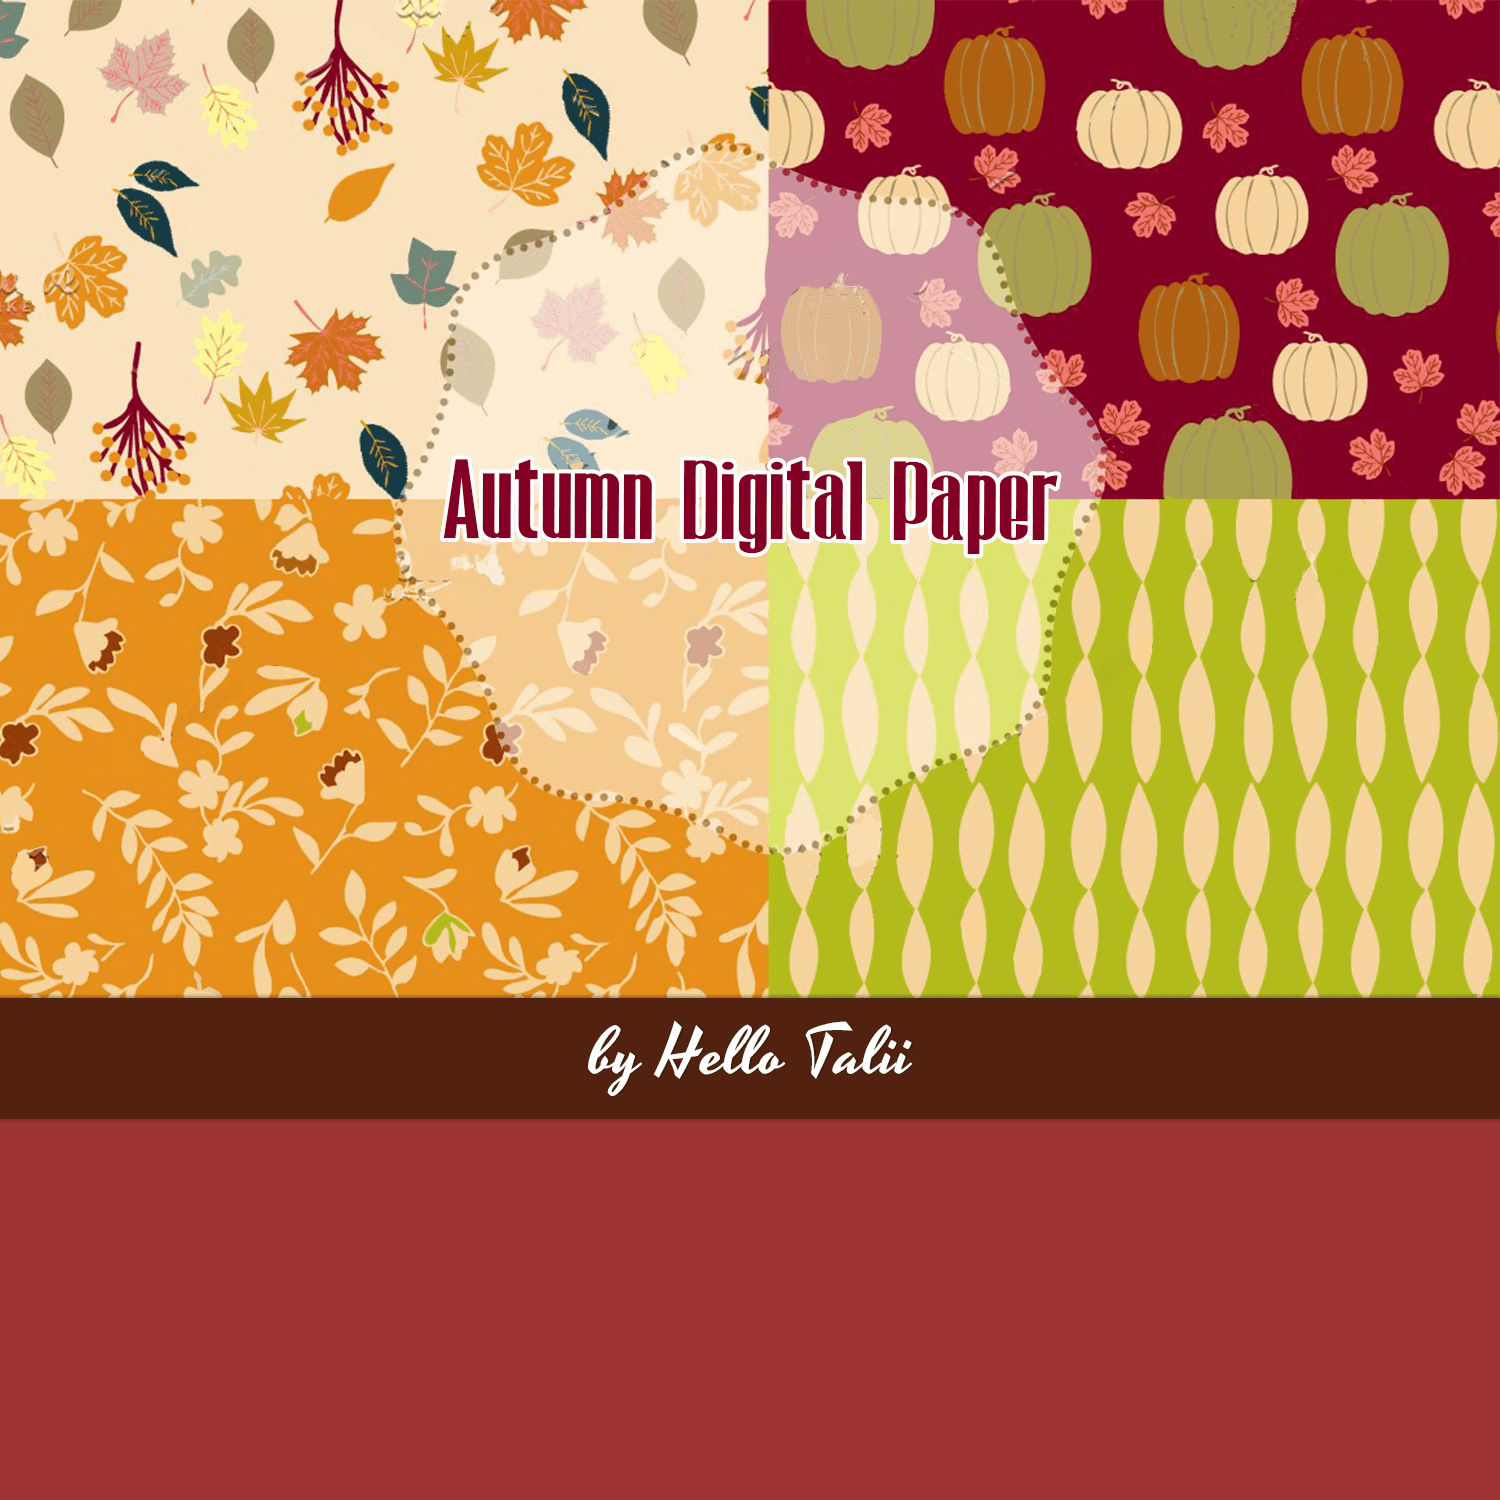 Autumn Digital Paper cover.